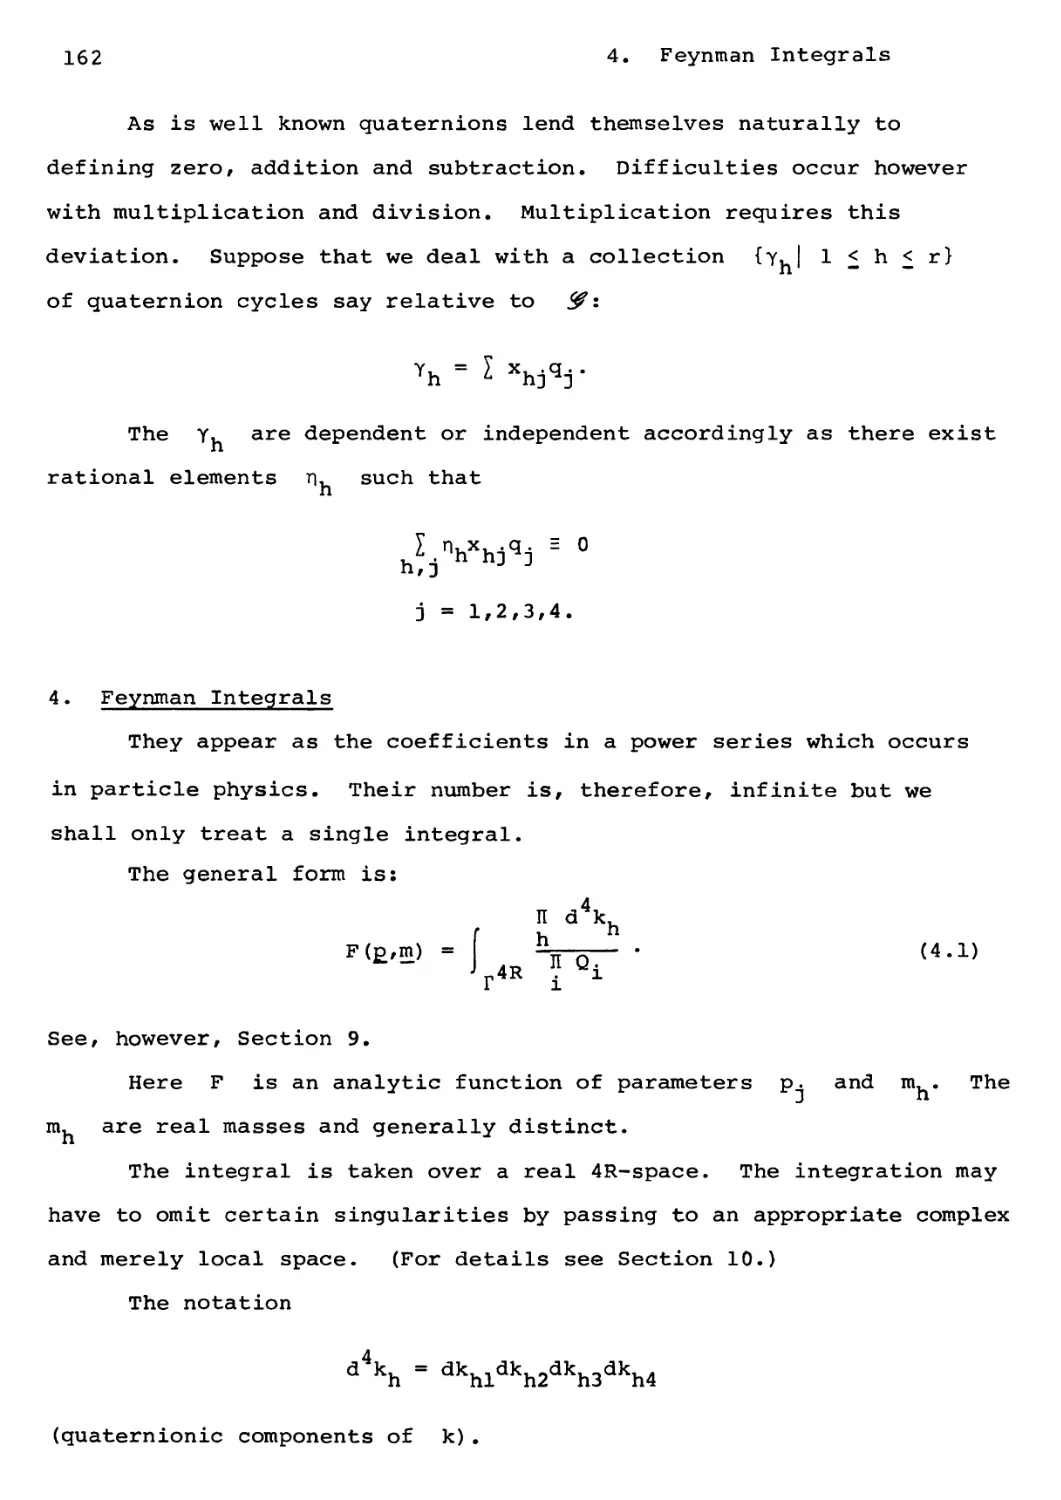 4. Feynman Integrals